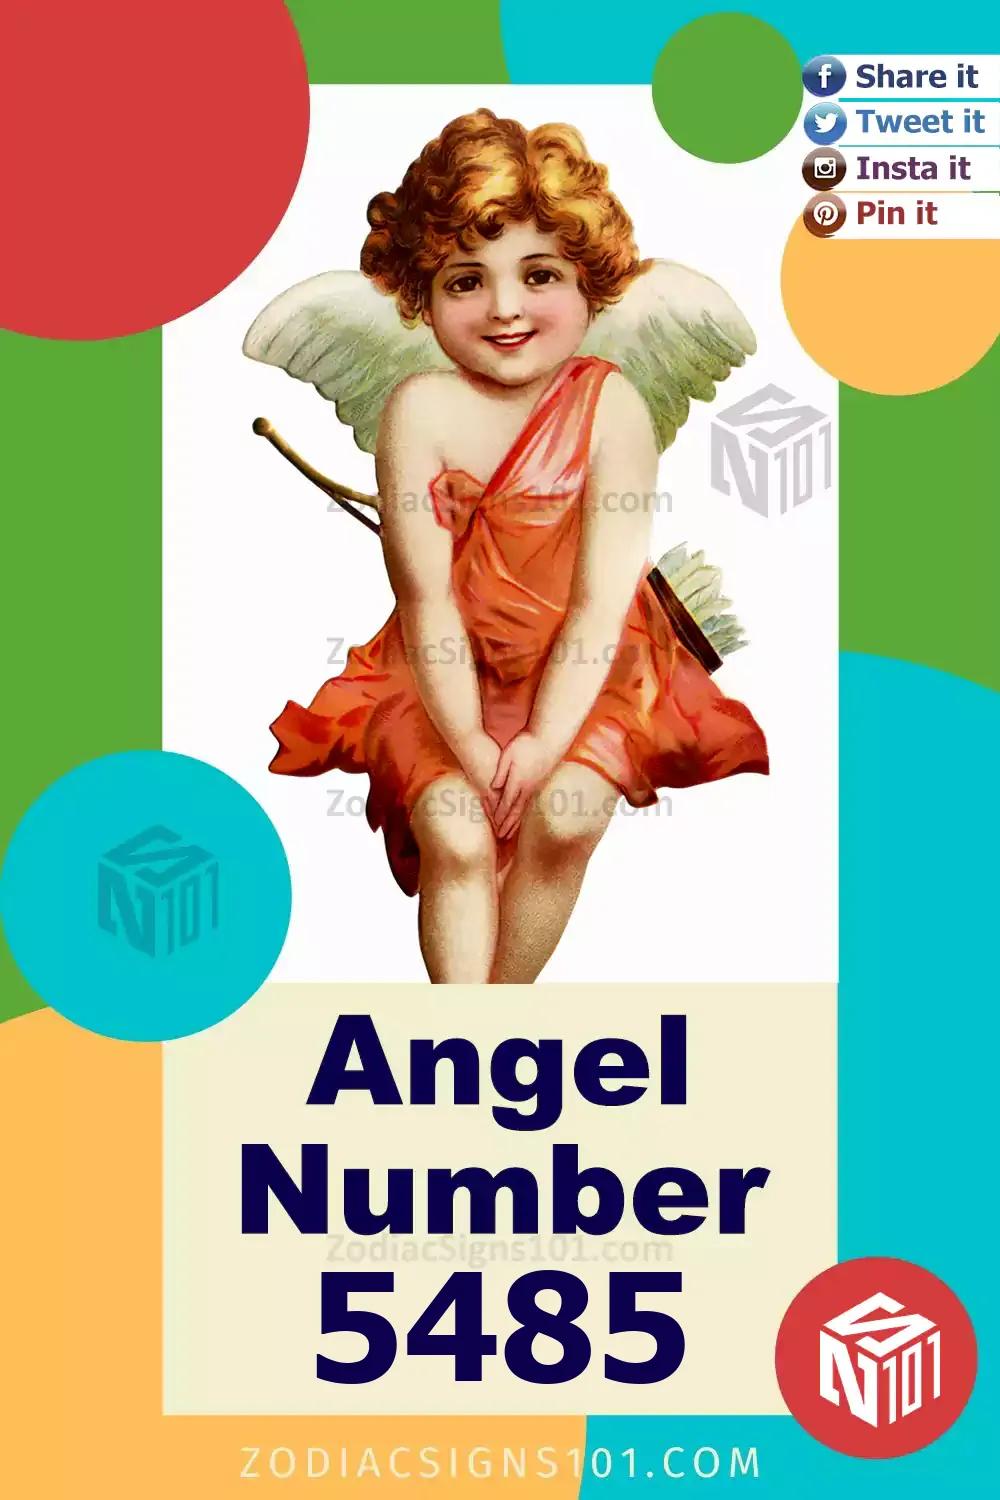 5485-Angel-Number-Meaning.jpg